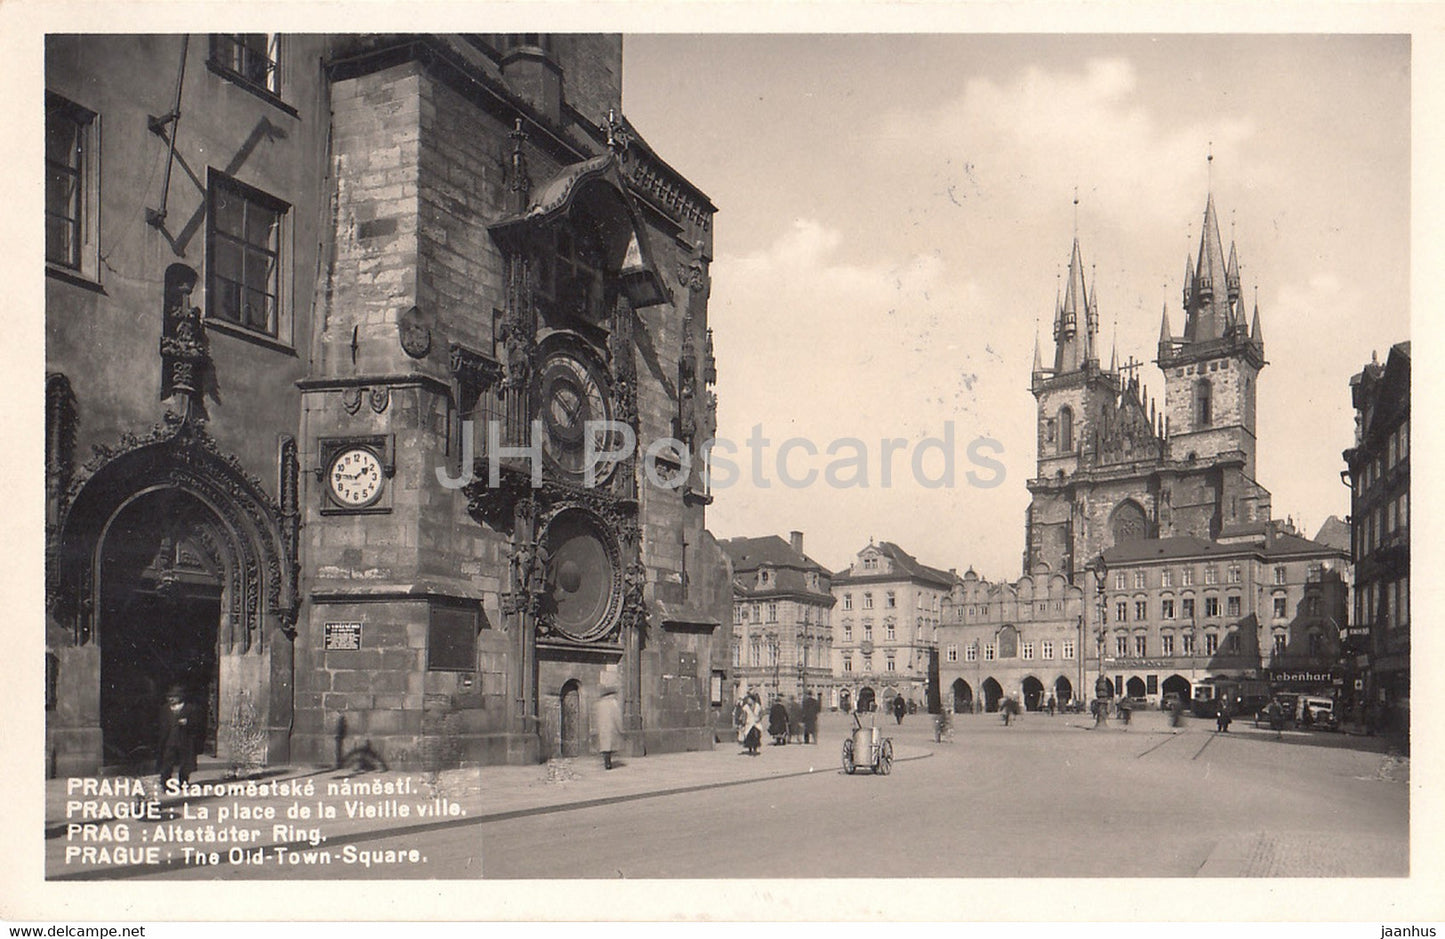 Praha - Prague - Staromestske namesti - old postcard -  1937 - Czechoslovakia - Czech Republic - used - JH Postcards